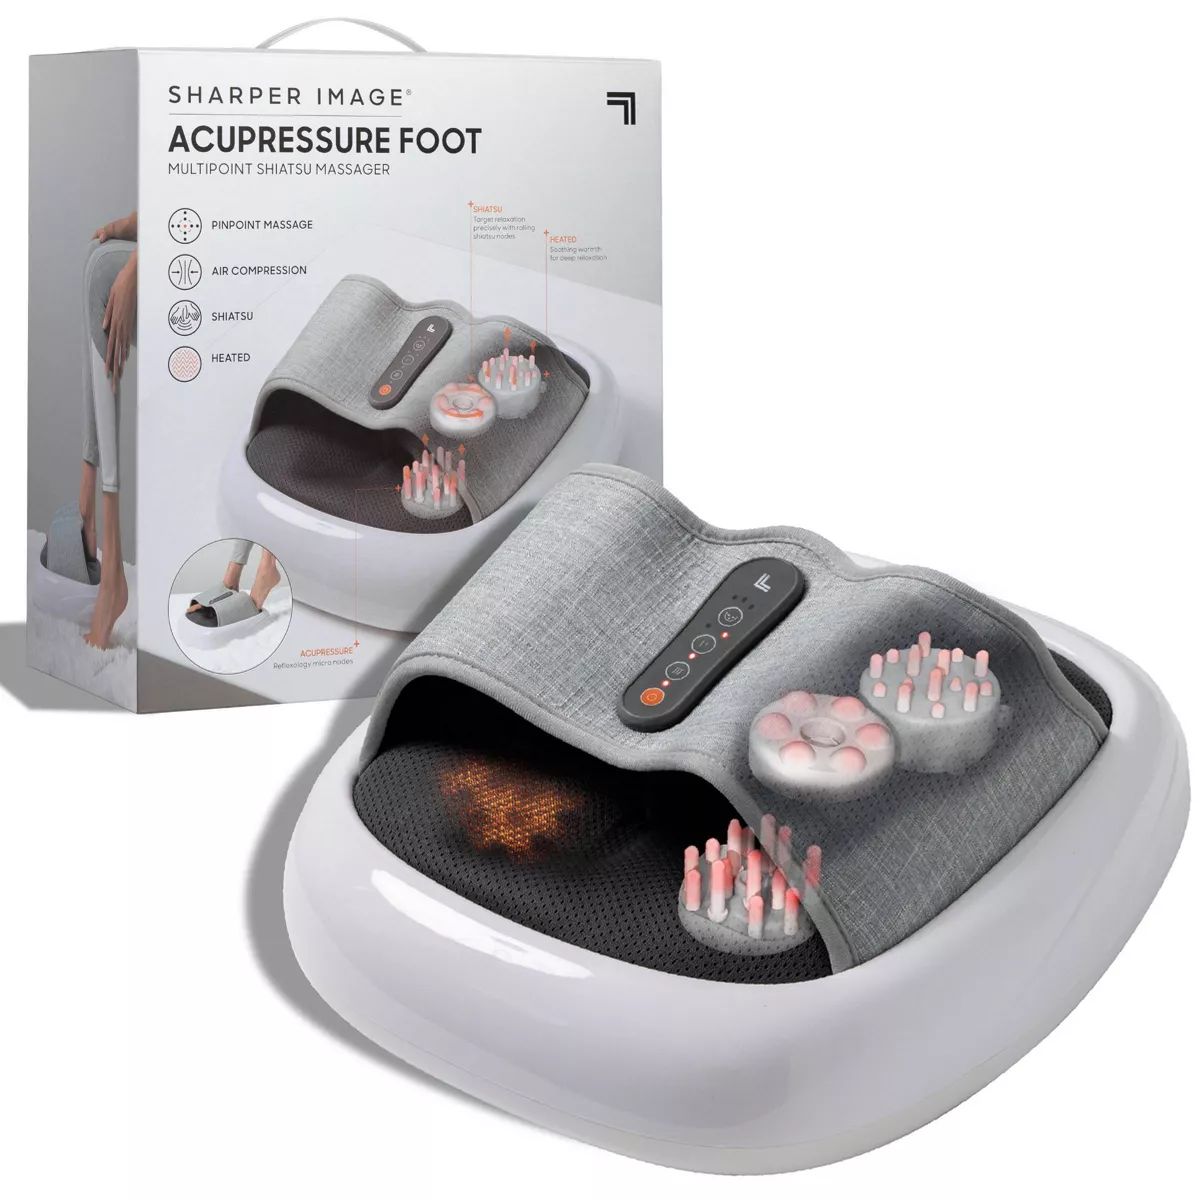 Sharper Image Foot Multipoint Acupressure Massager - Gray | Target